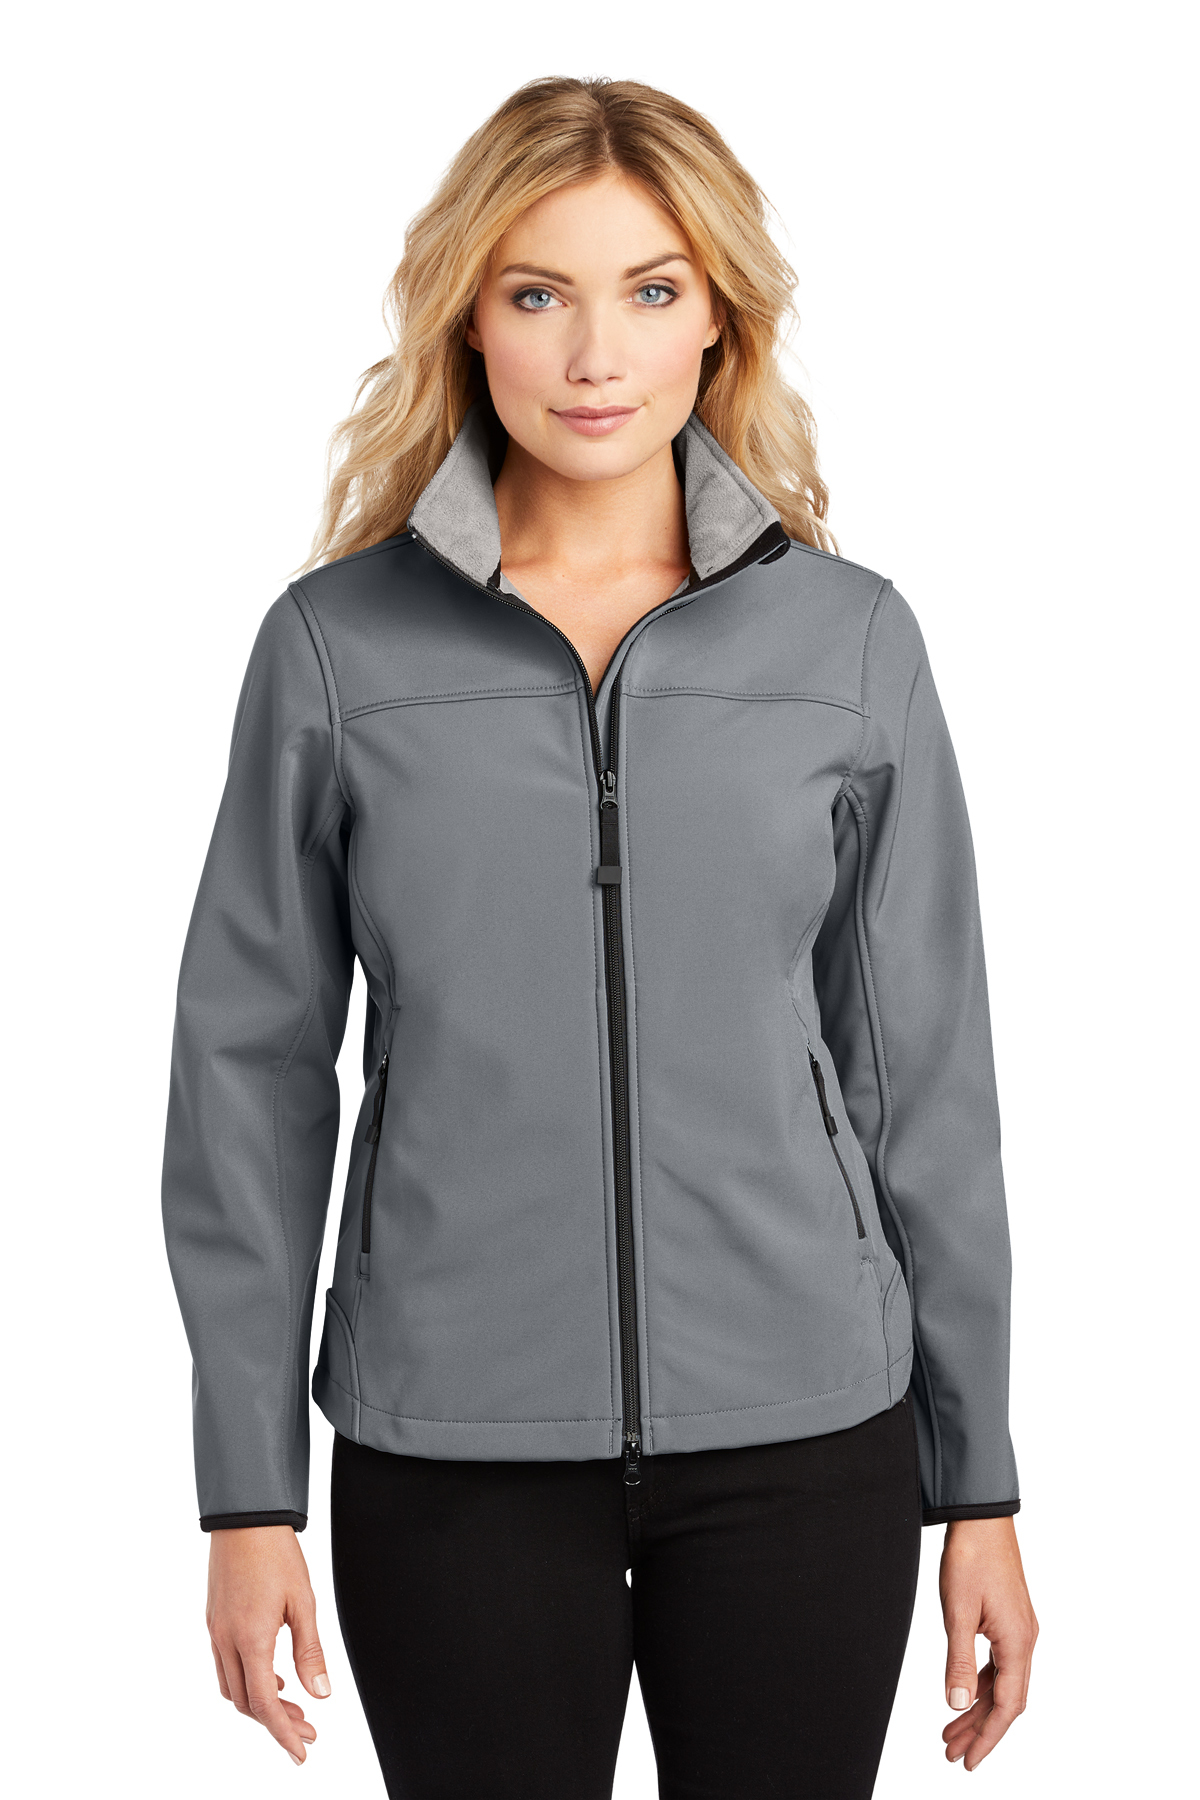 Port Authority Ladies Glacier Soft Shell Jacket | Product | SanMar